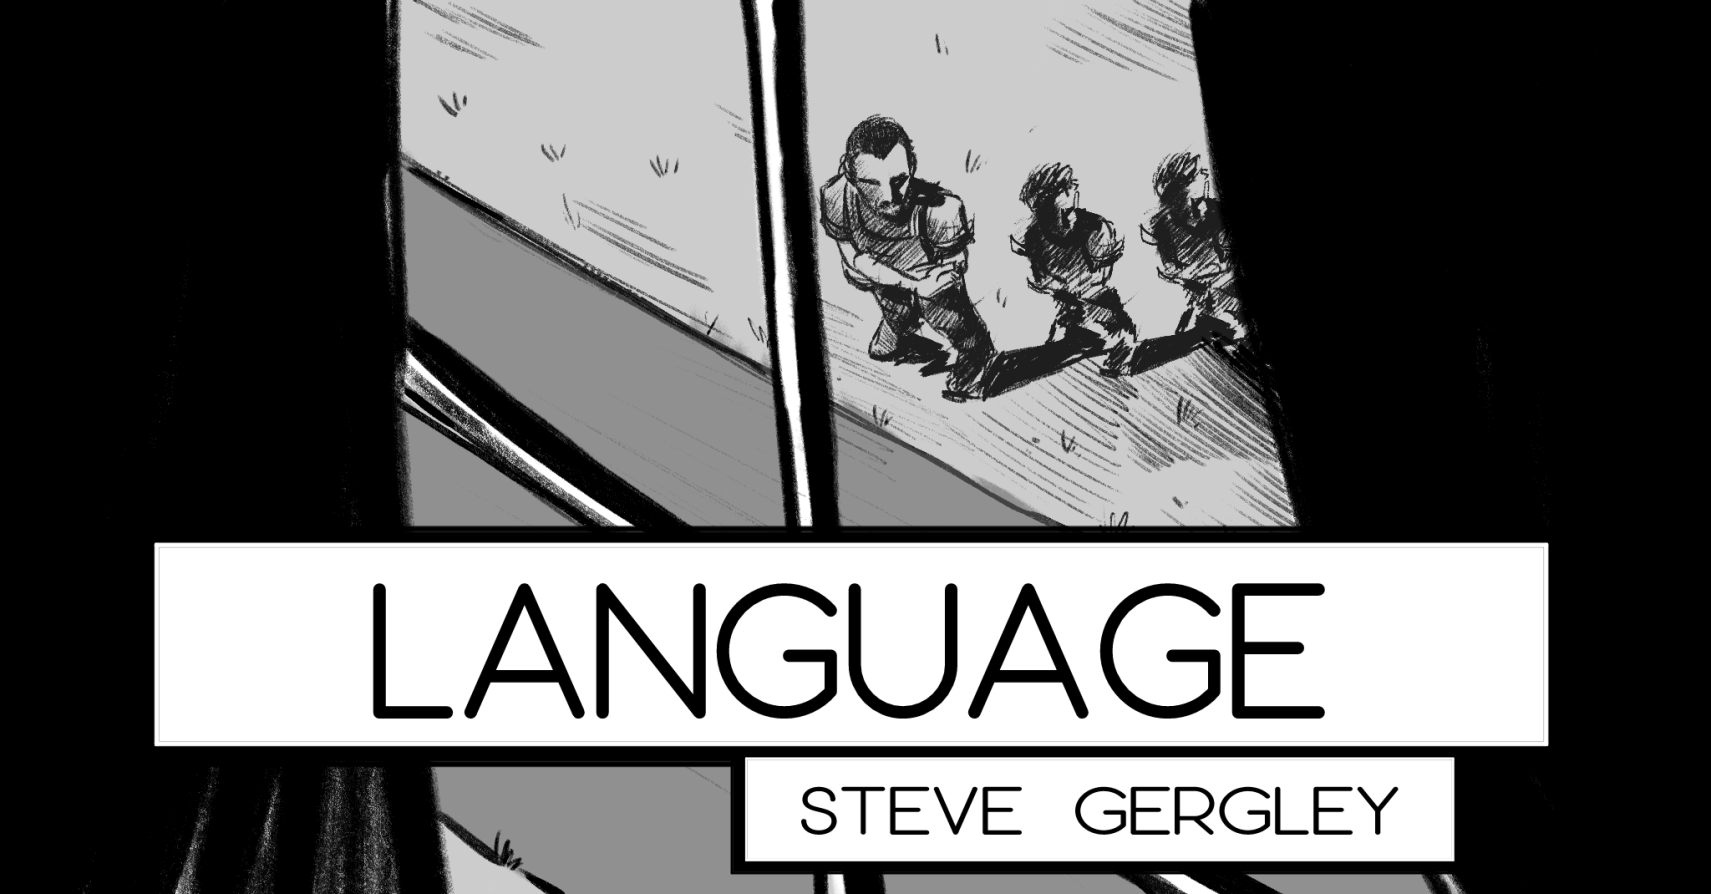 LANGUAGE by Steve Gergley